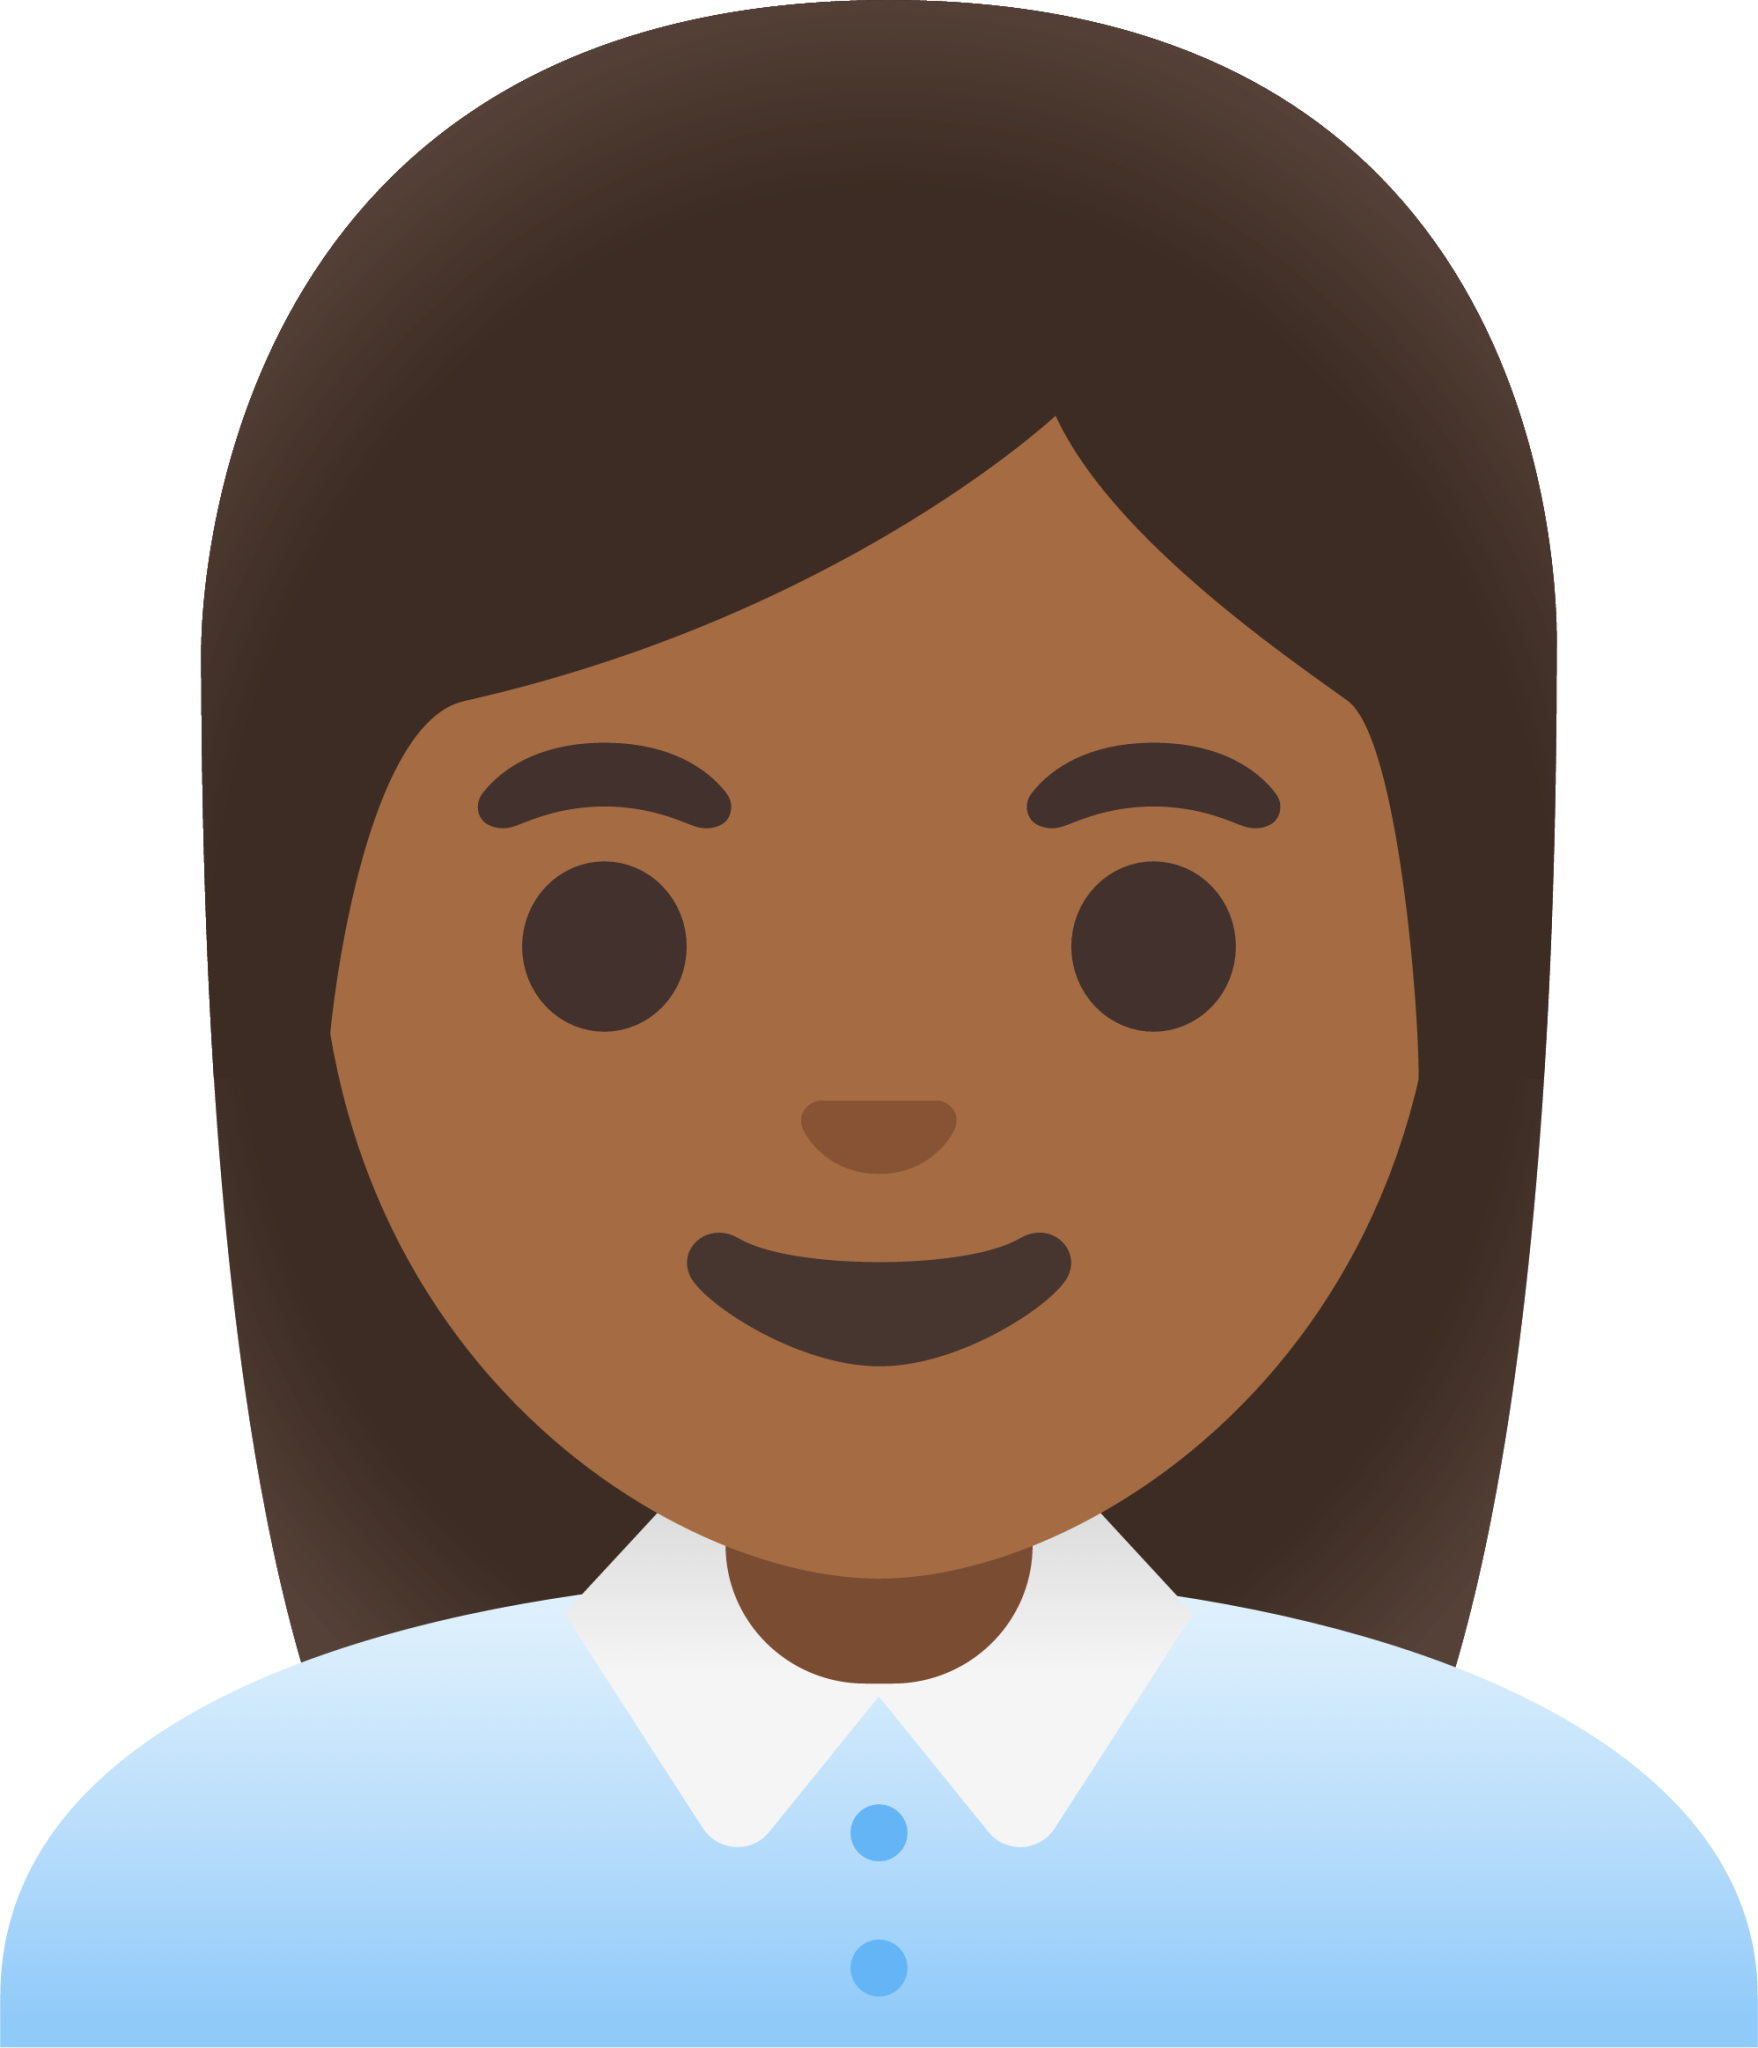 woman office worker: medium-dark skin tone emoji